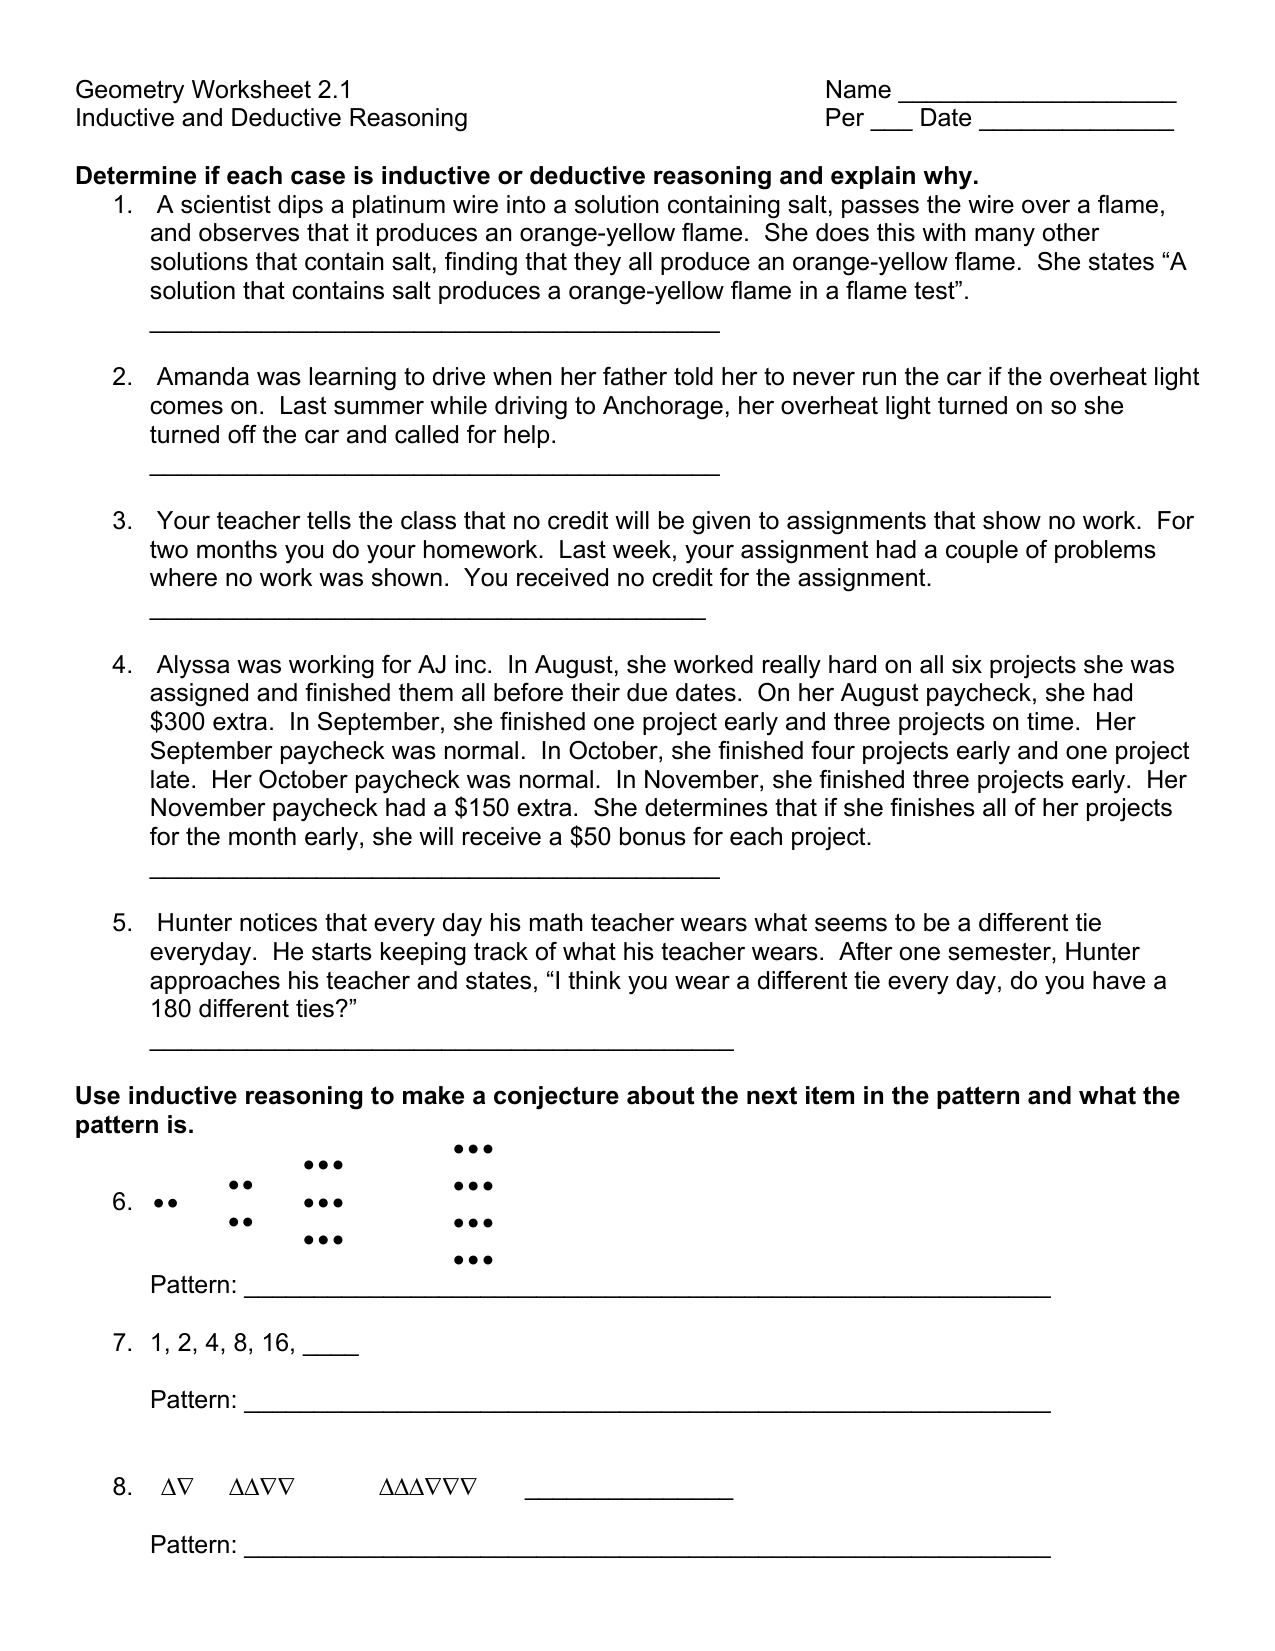 Geometry Worksheet 1111.11 Name Inductive and Deductive Reasoning With Inductive And Deductive Reasoning Worksheet